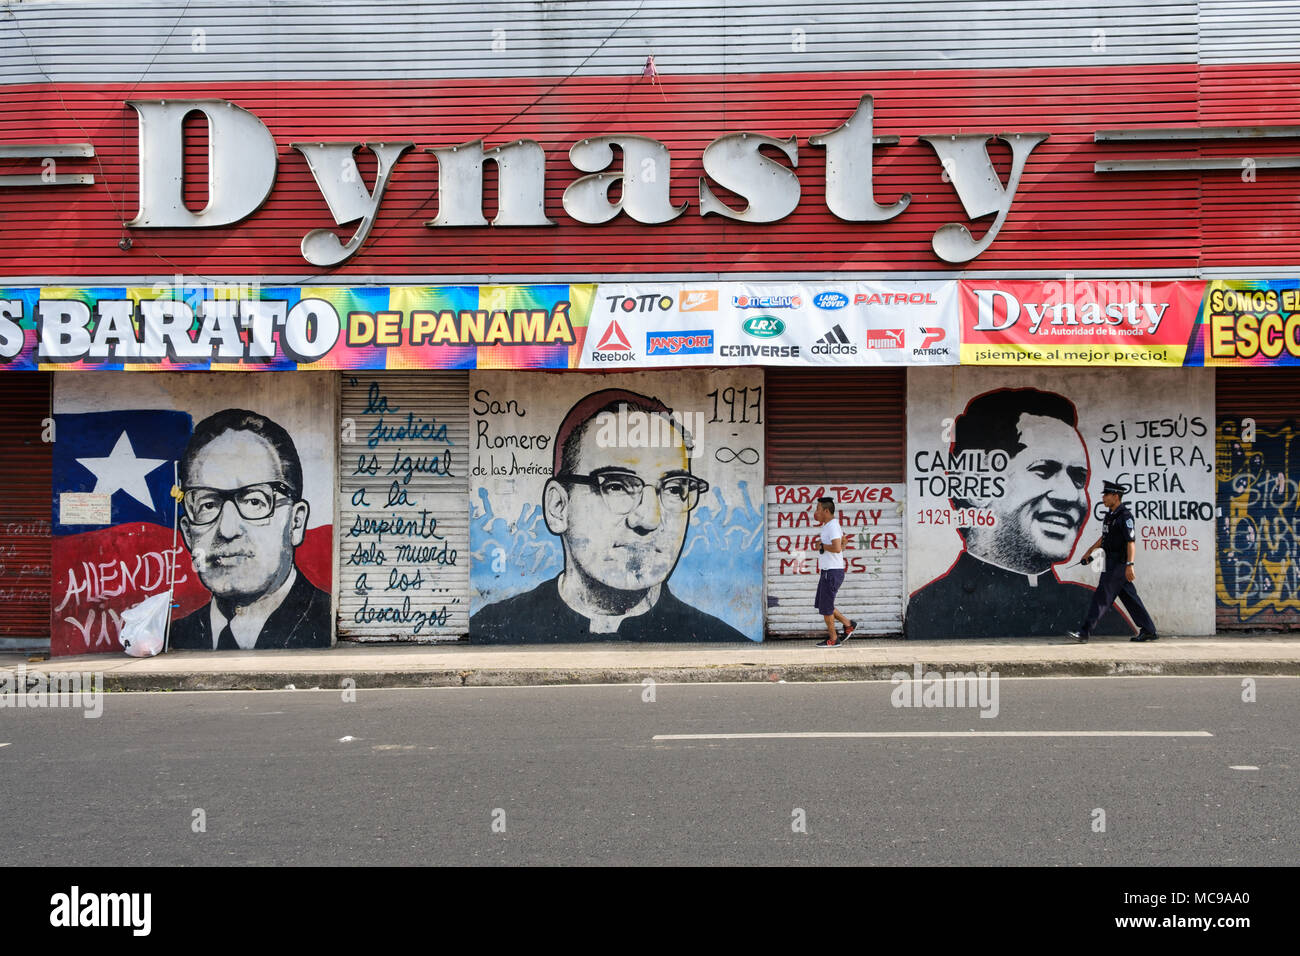 Panama City, Panama - march 2018: Political Graffiti, mural paintings and portraits of historical latin American people (Camilo Torres, Oscar Romero, Stock Photo